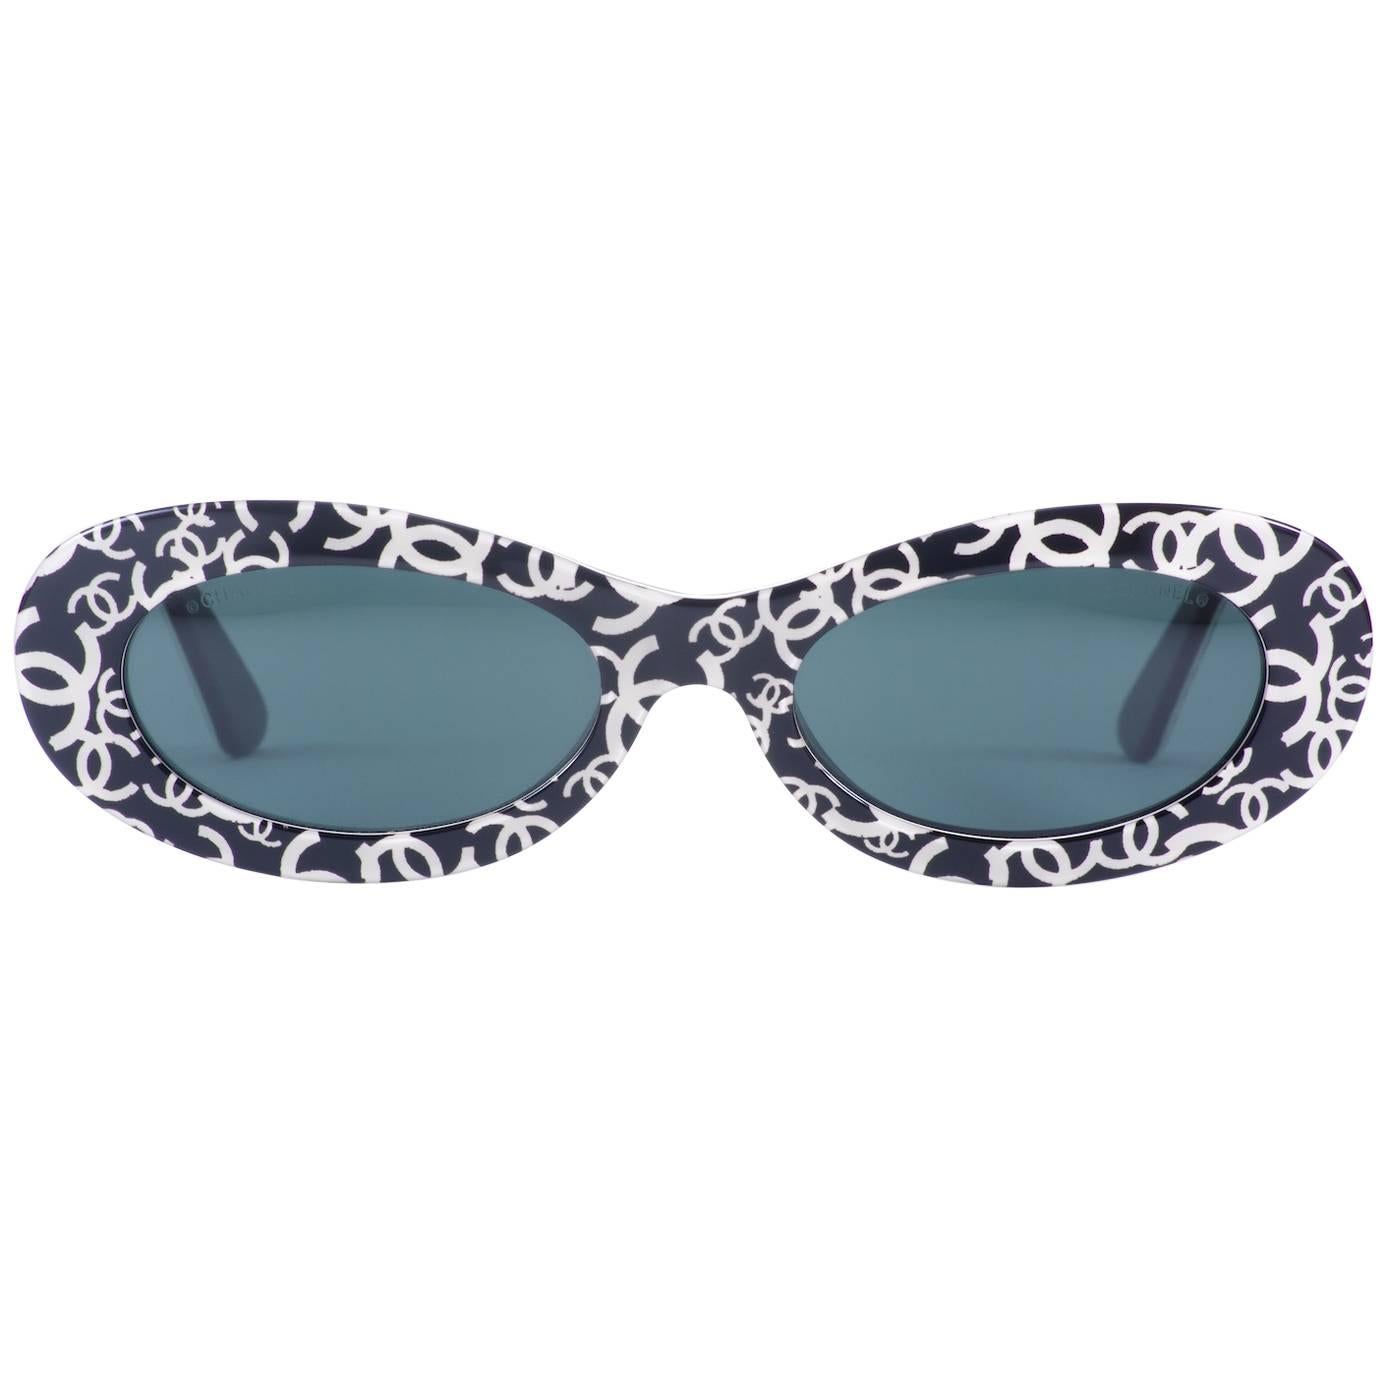 Haute Couture Lagerfeld Runway Accessory  CHANEL "CC"  Sunglasses  For Sale